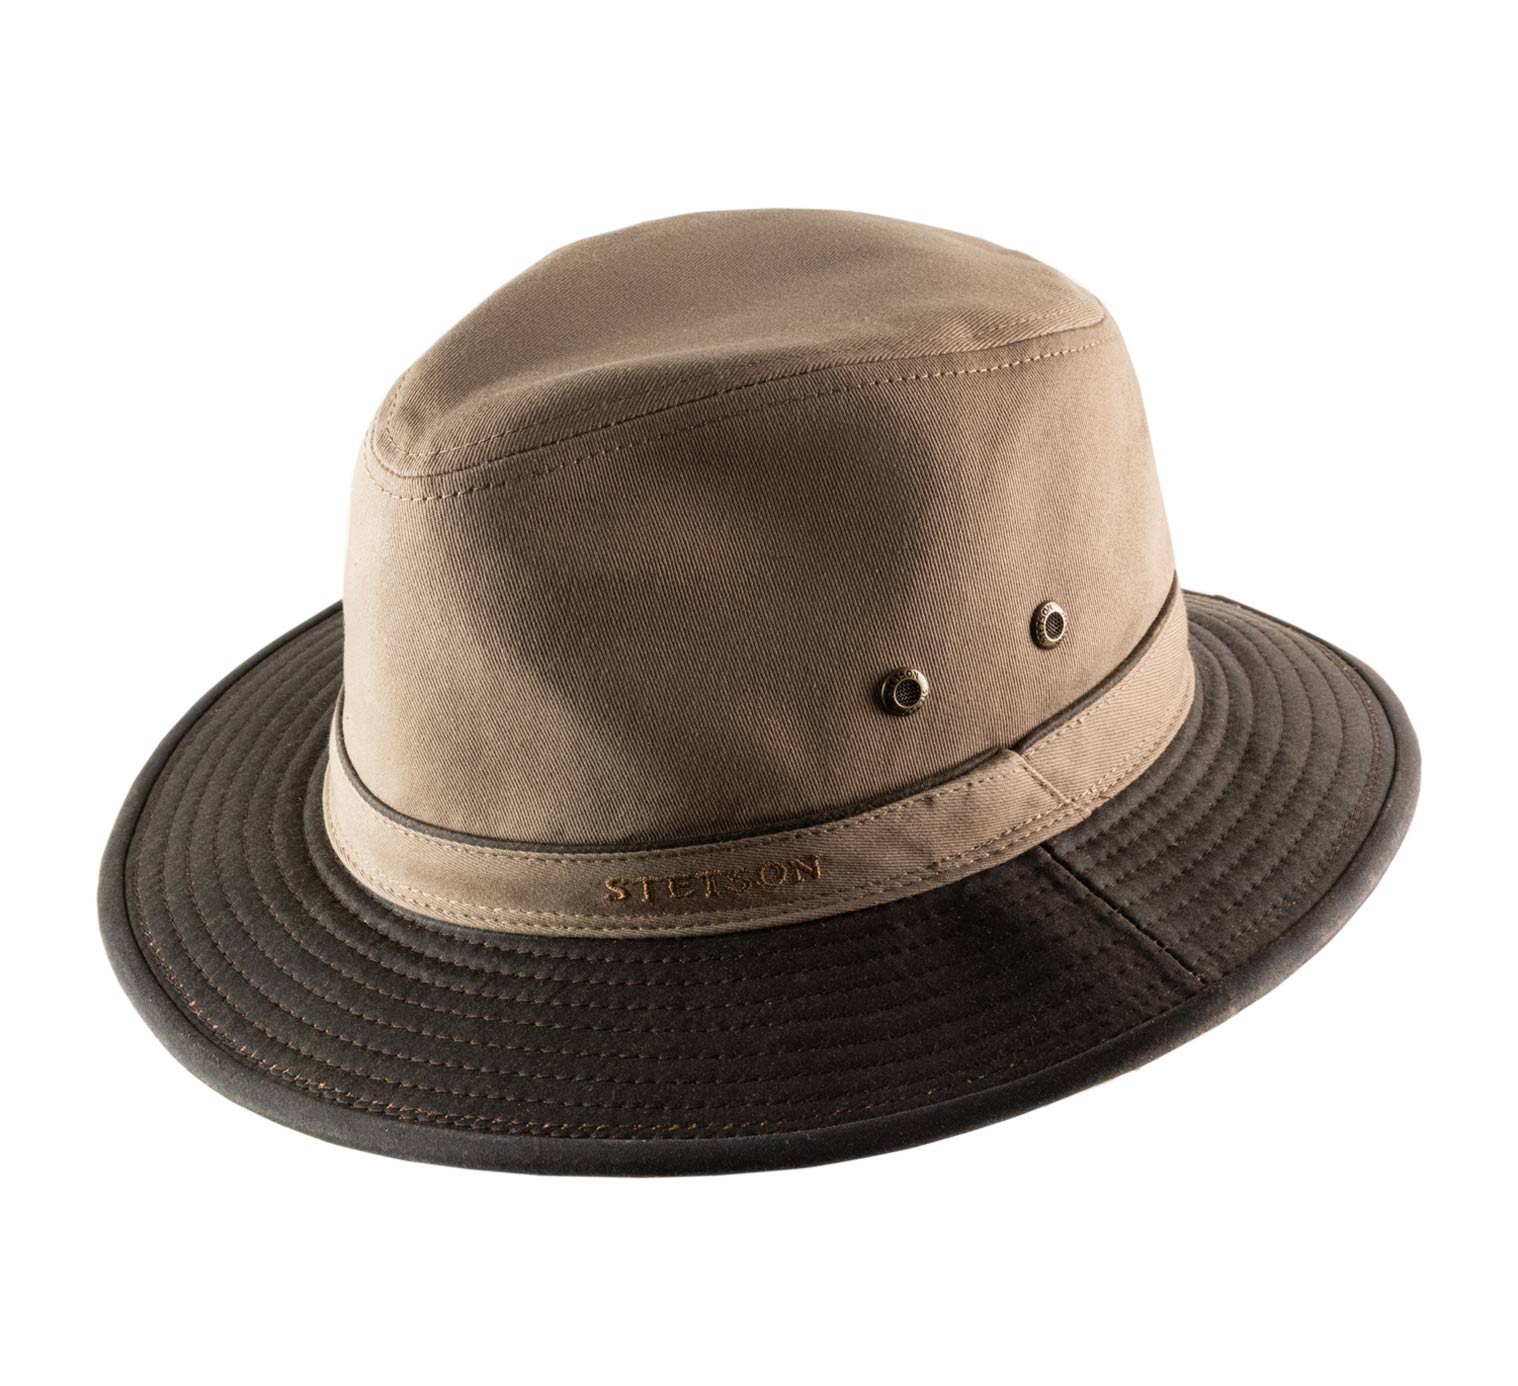 Stetson Men's Traveller Cotton Fedora Hat Size S